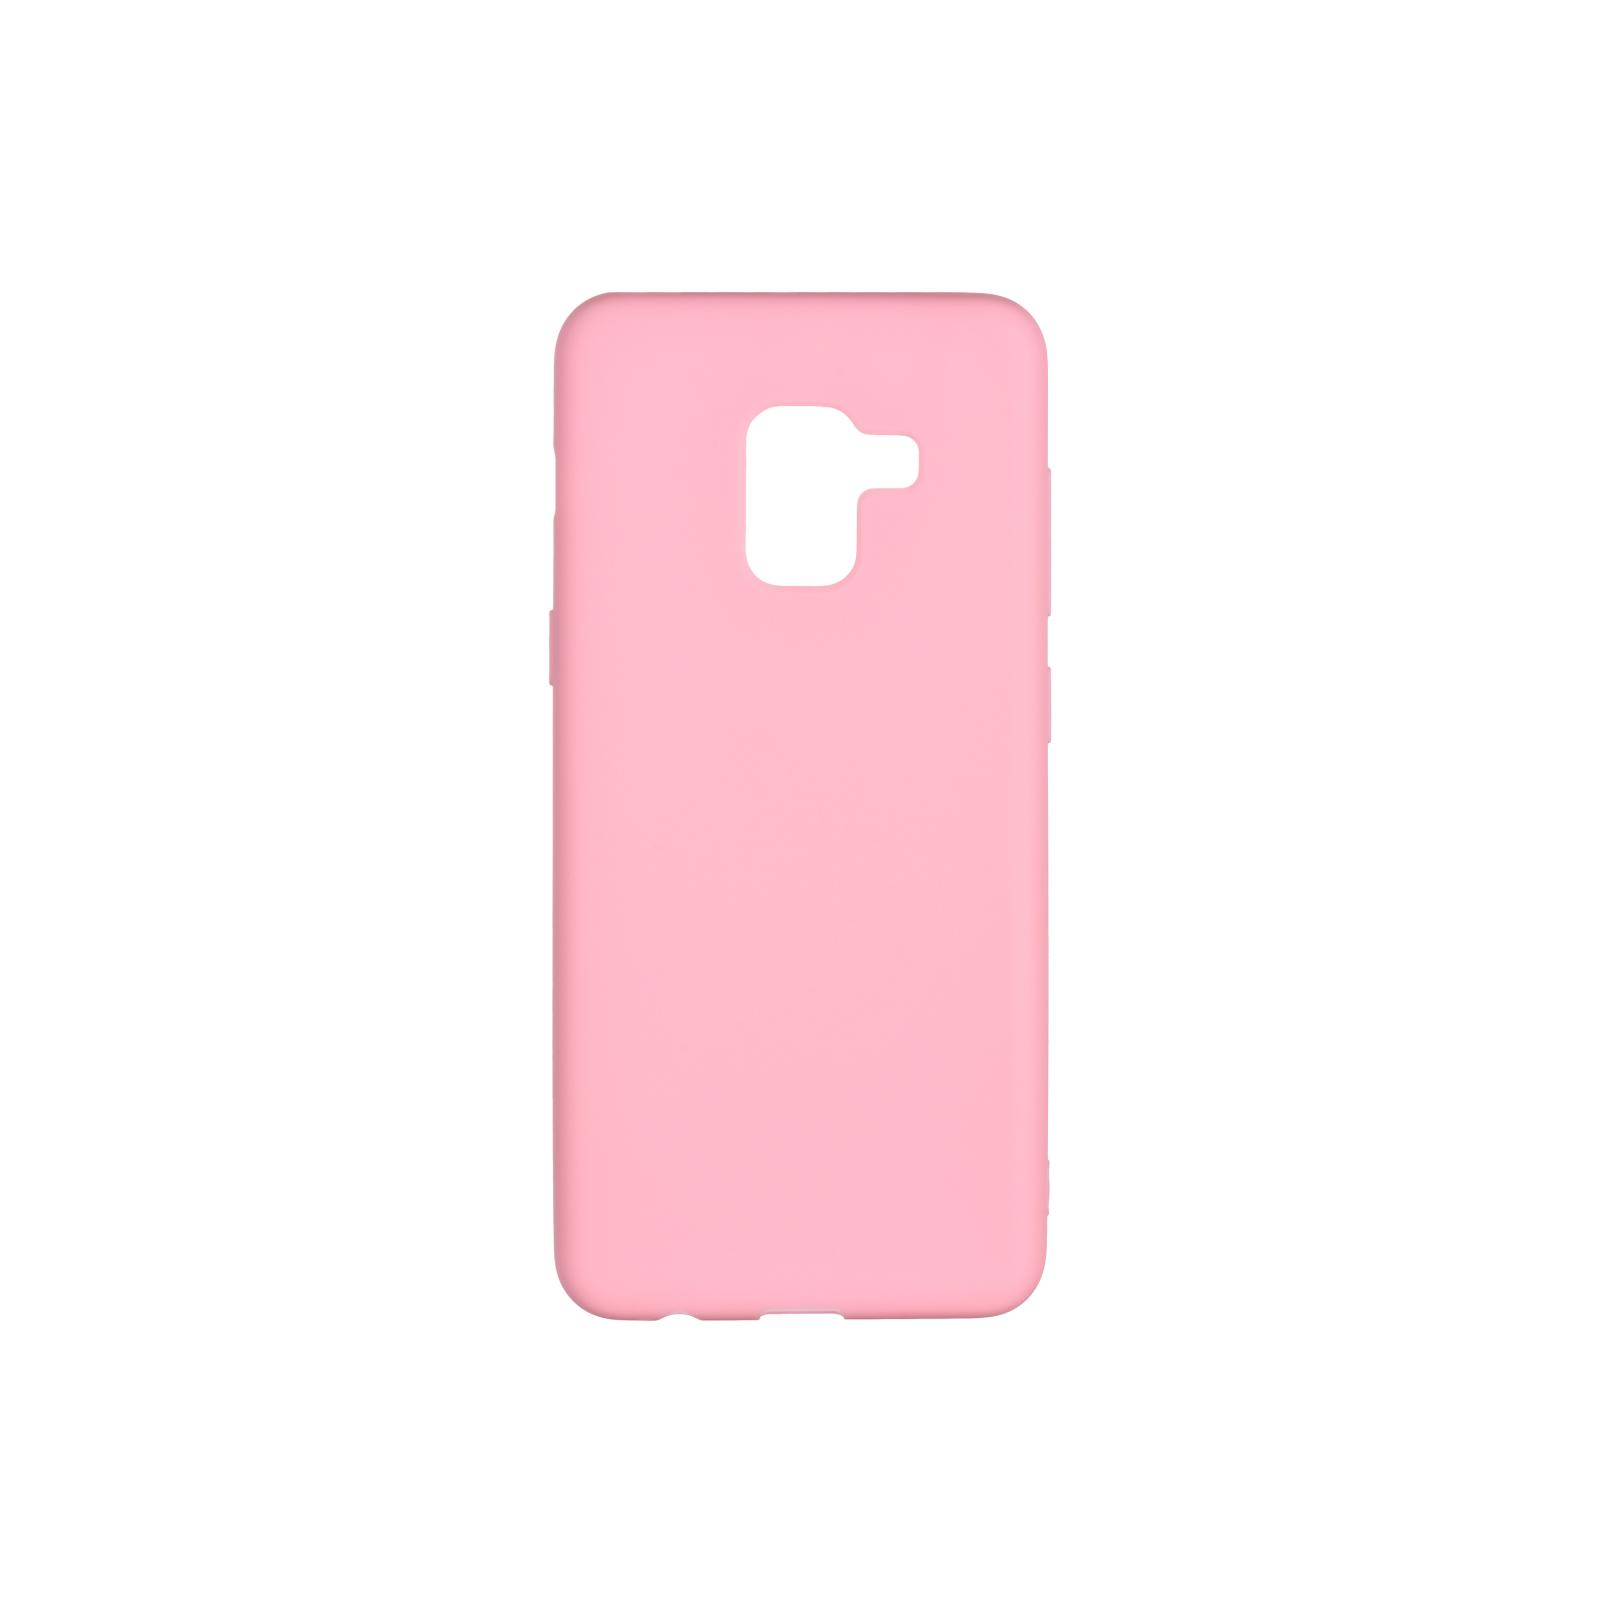 Чехол для мобильного телефона 2E Samsung Galaxy A8 2018 (A530) , Soft touch, Pink (2E-G-A8-18-NKST-PK)